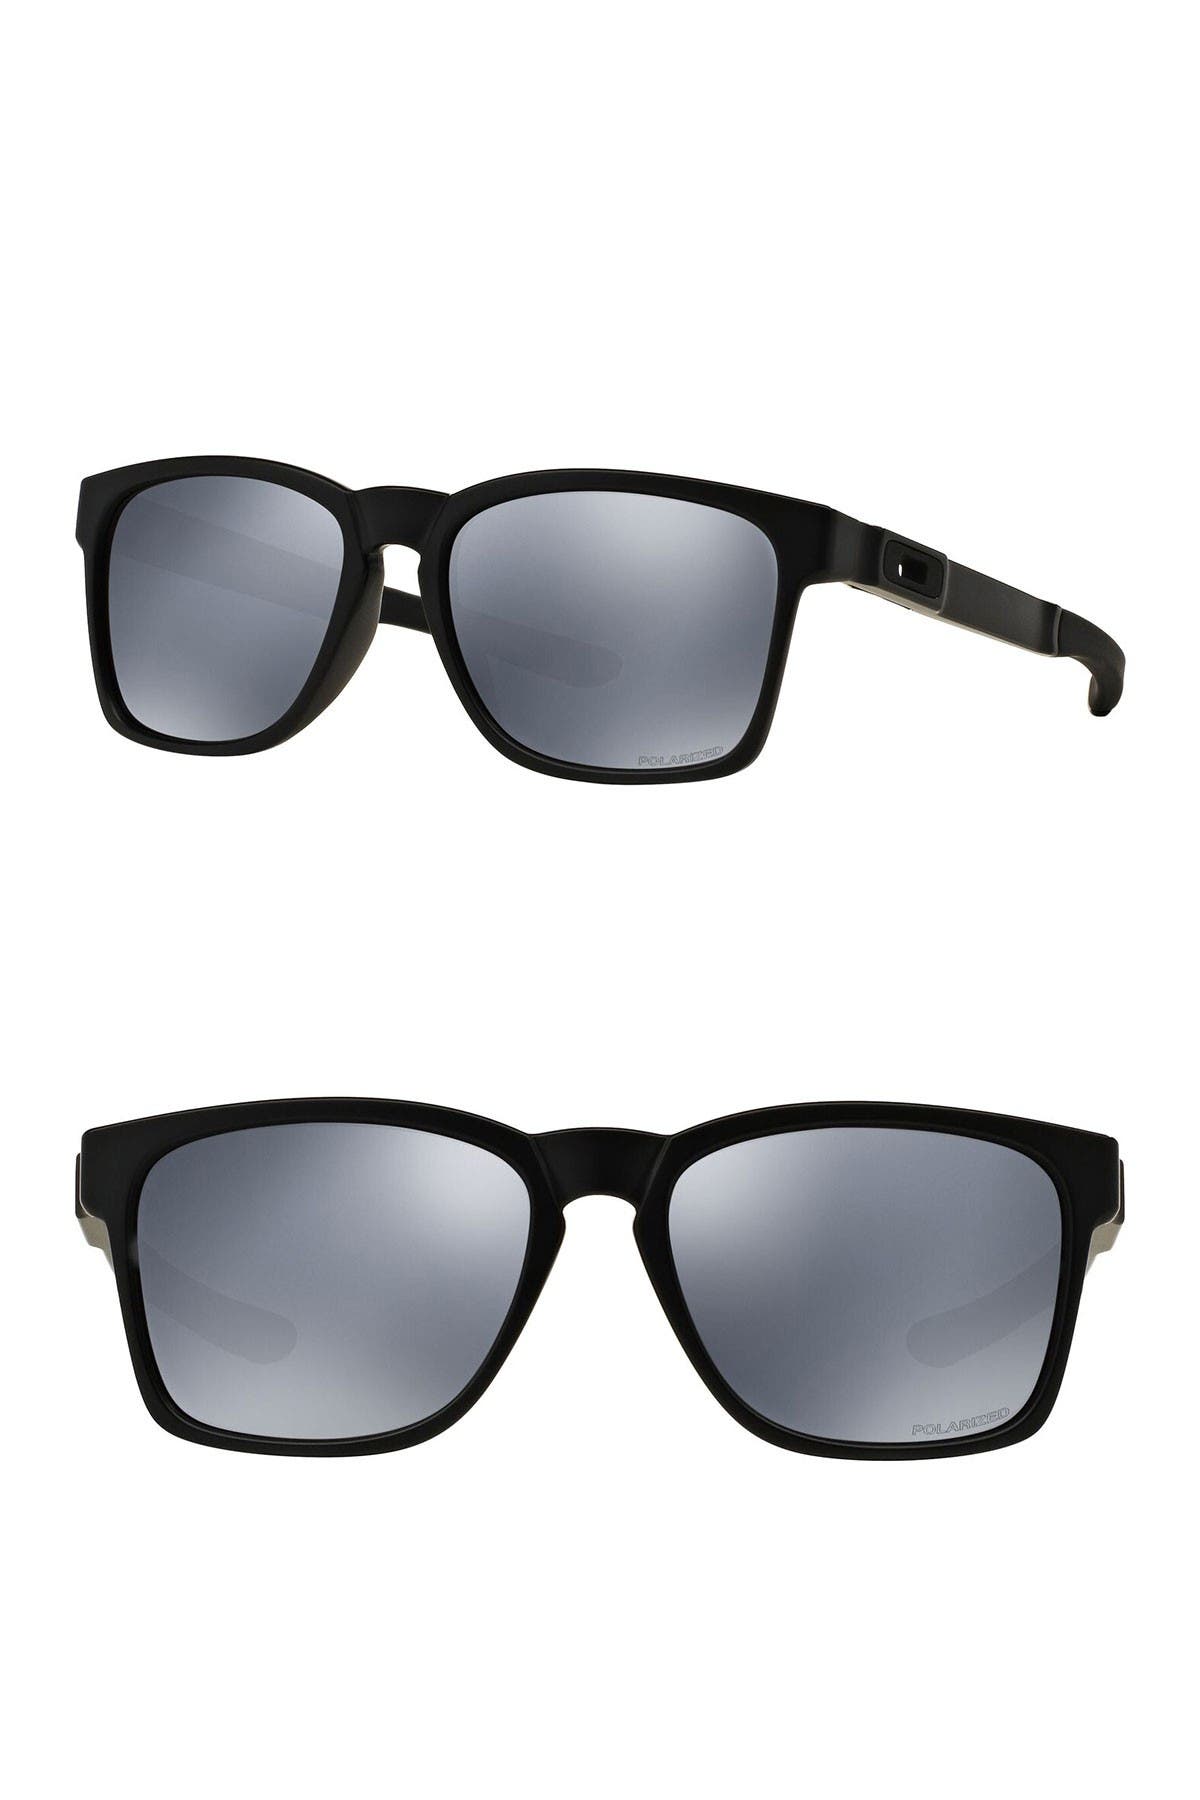 oakley rectangular sunglasses